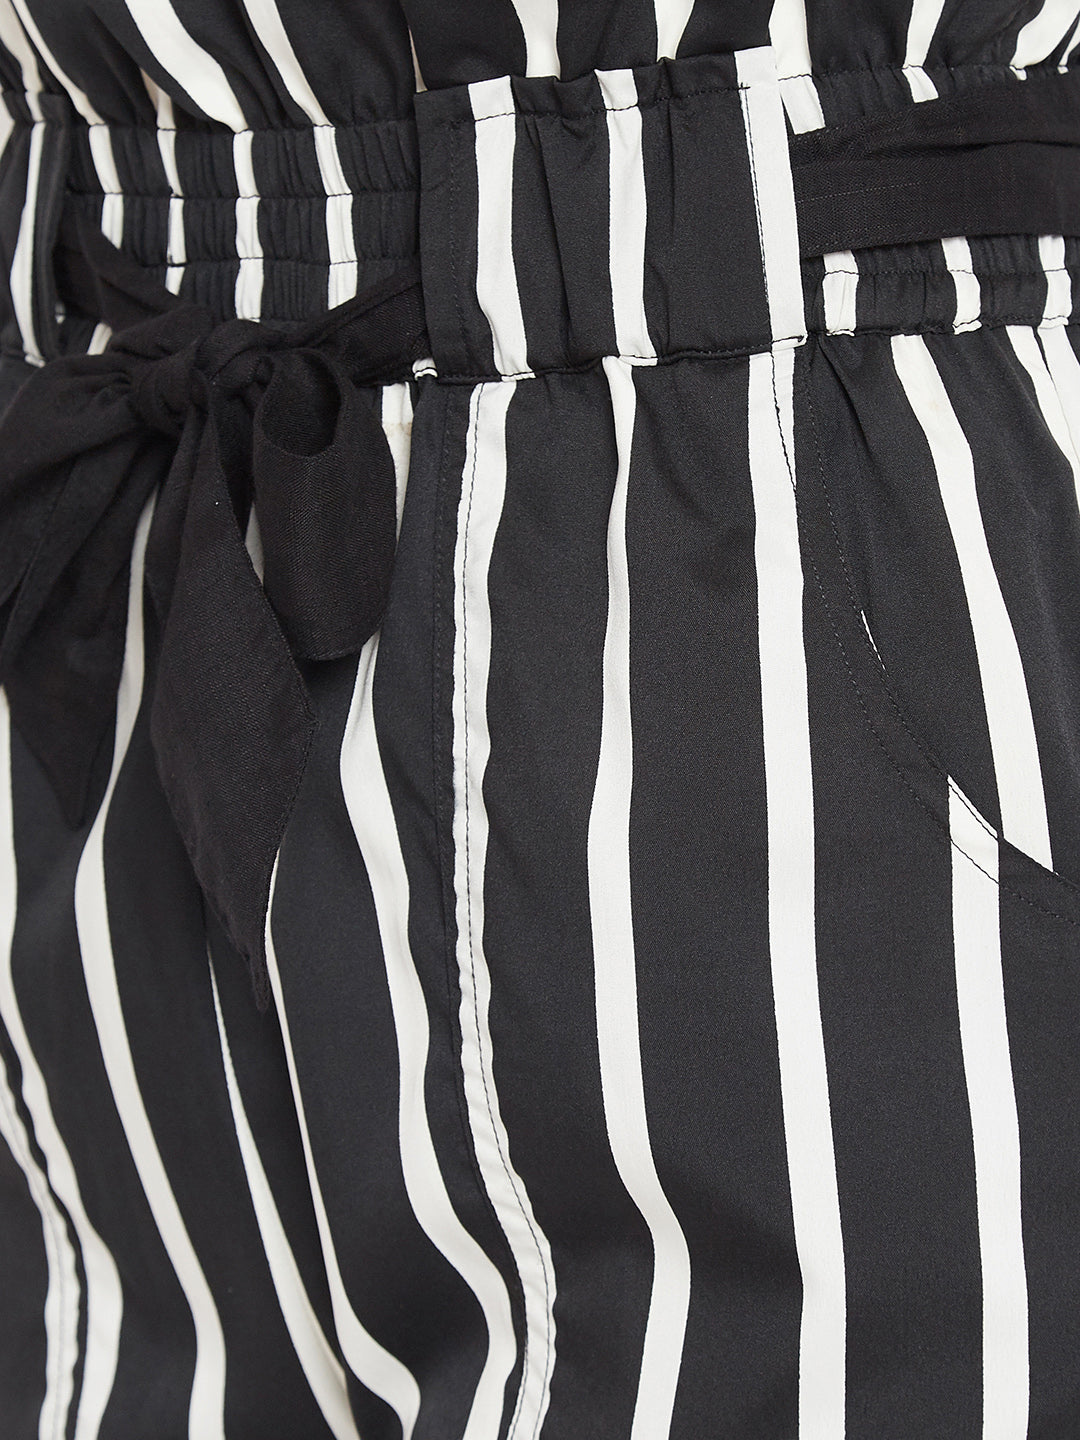 Women's black and white stripes high waist trouser